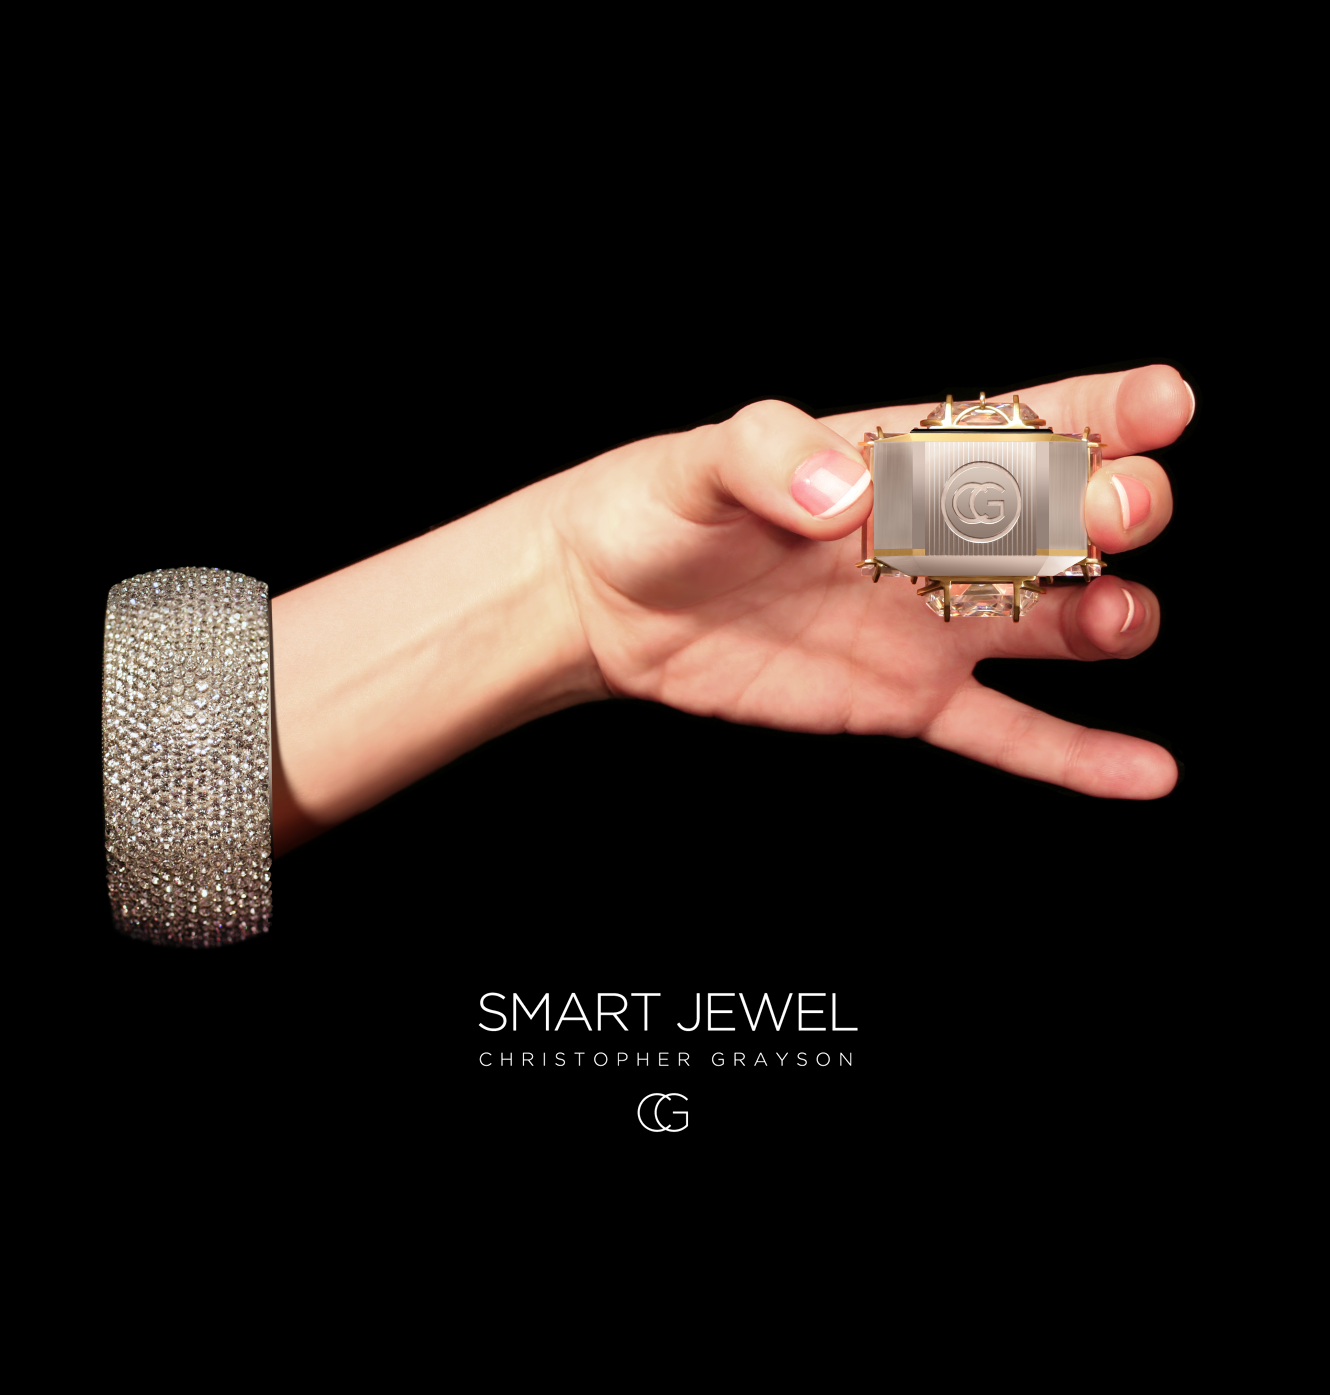 Smart Jewel by Christopher Grayson